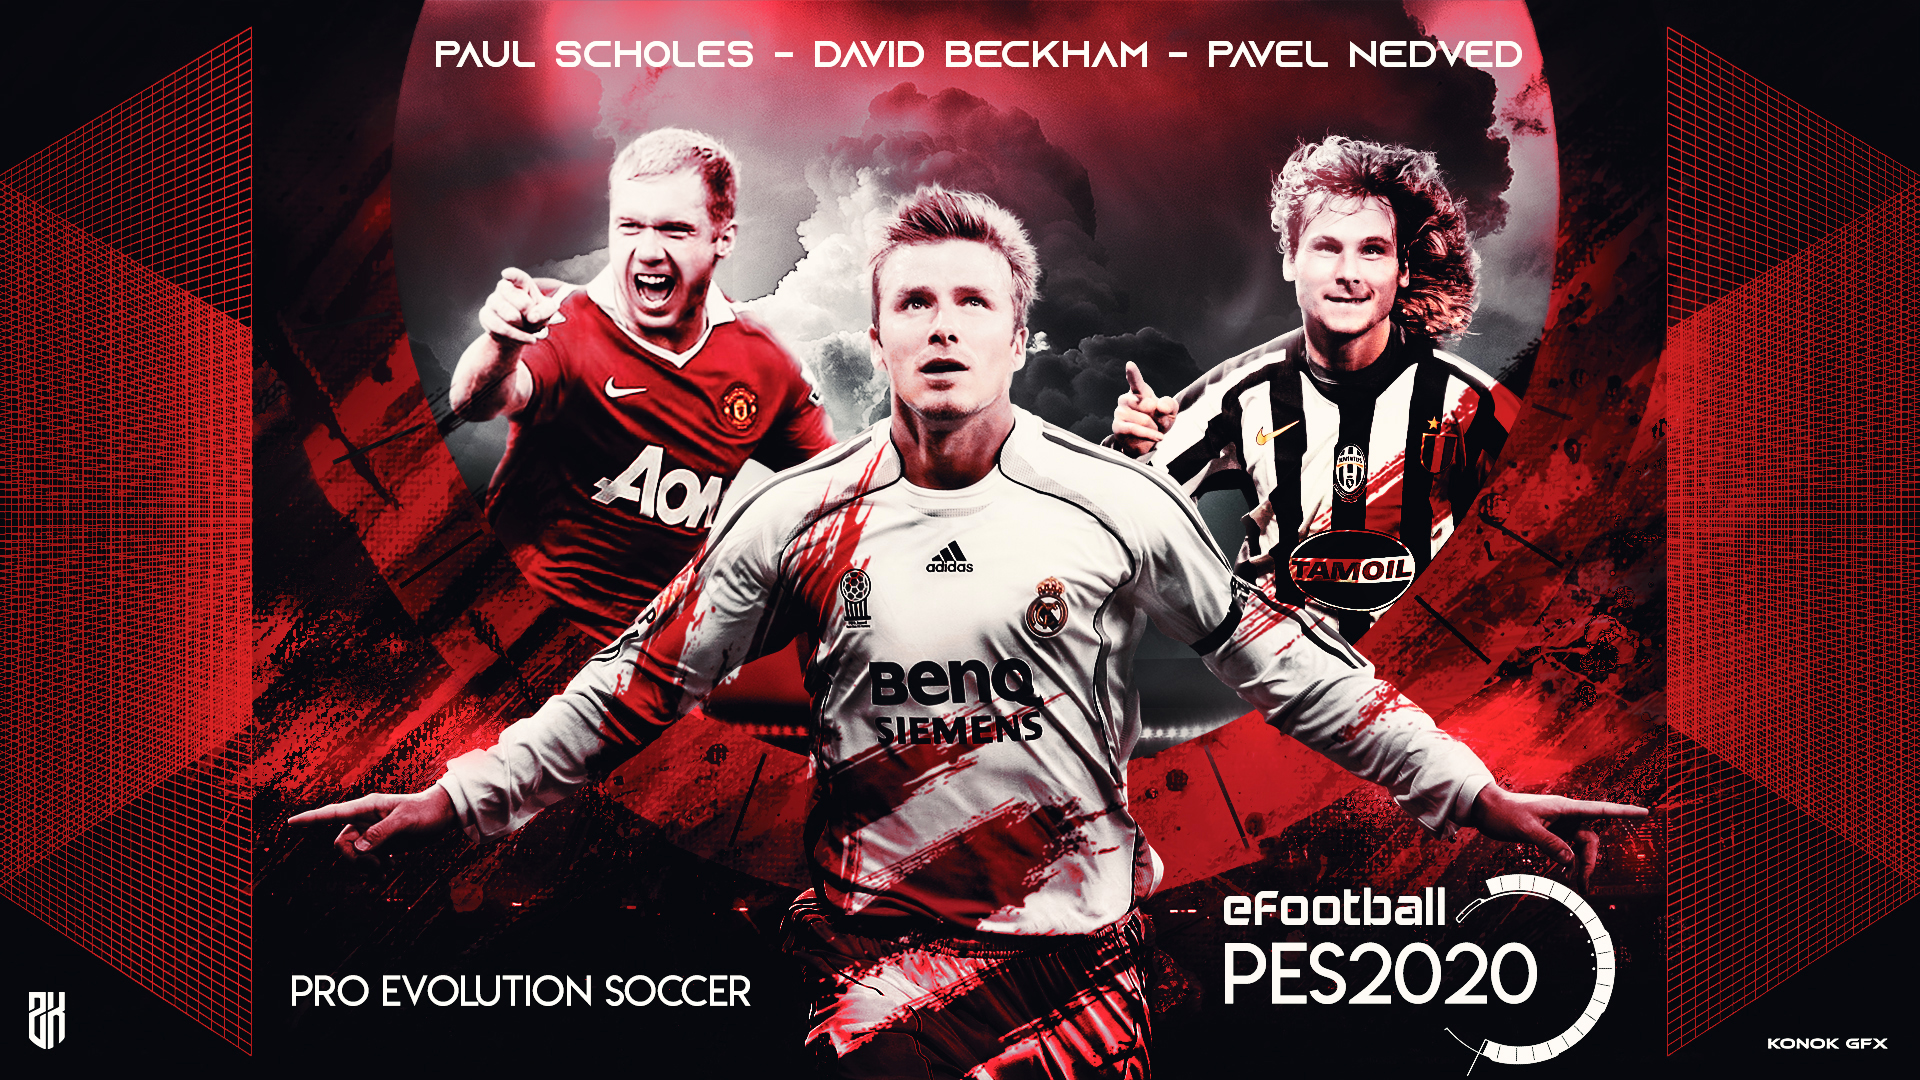 PES2020 Football Wallpaper - Legends Card by KonokGFX on DeviantArt